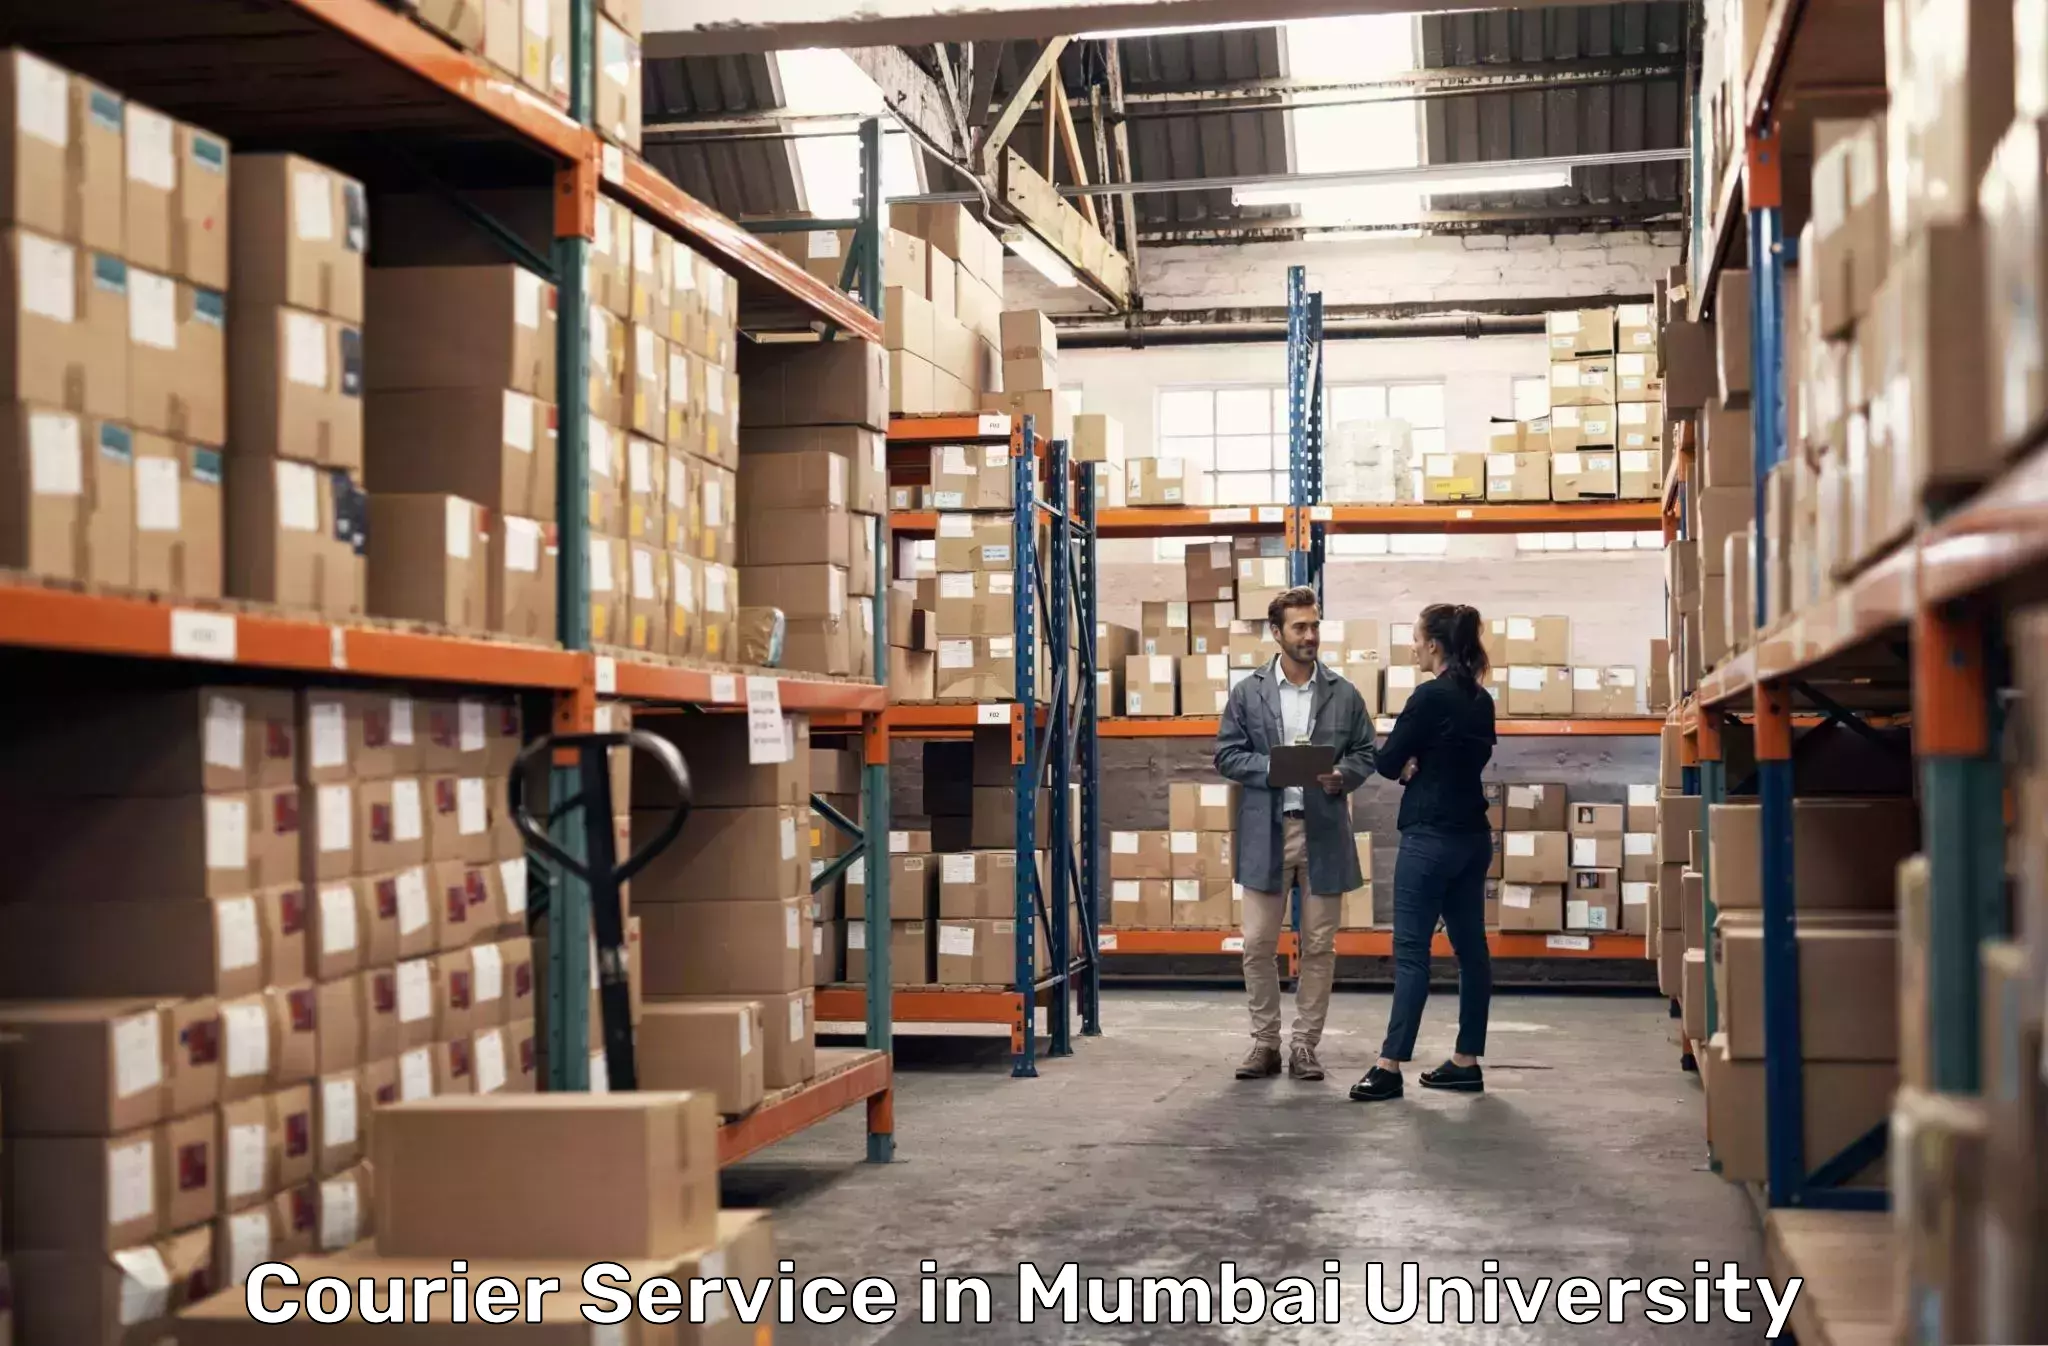 Nationwide shipping capabilities in Mumbai University